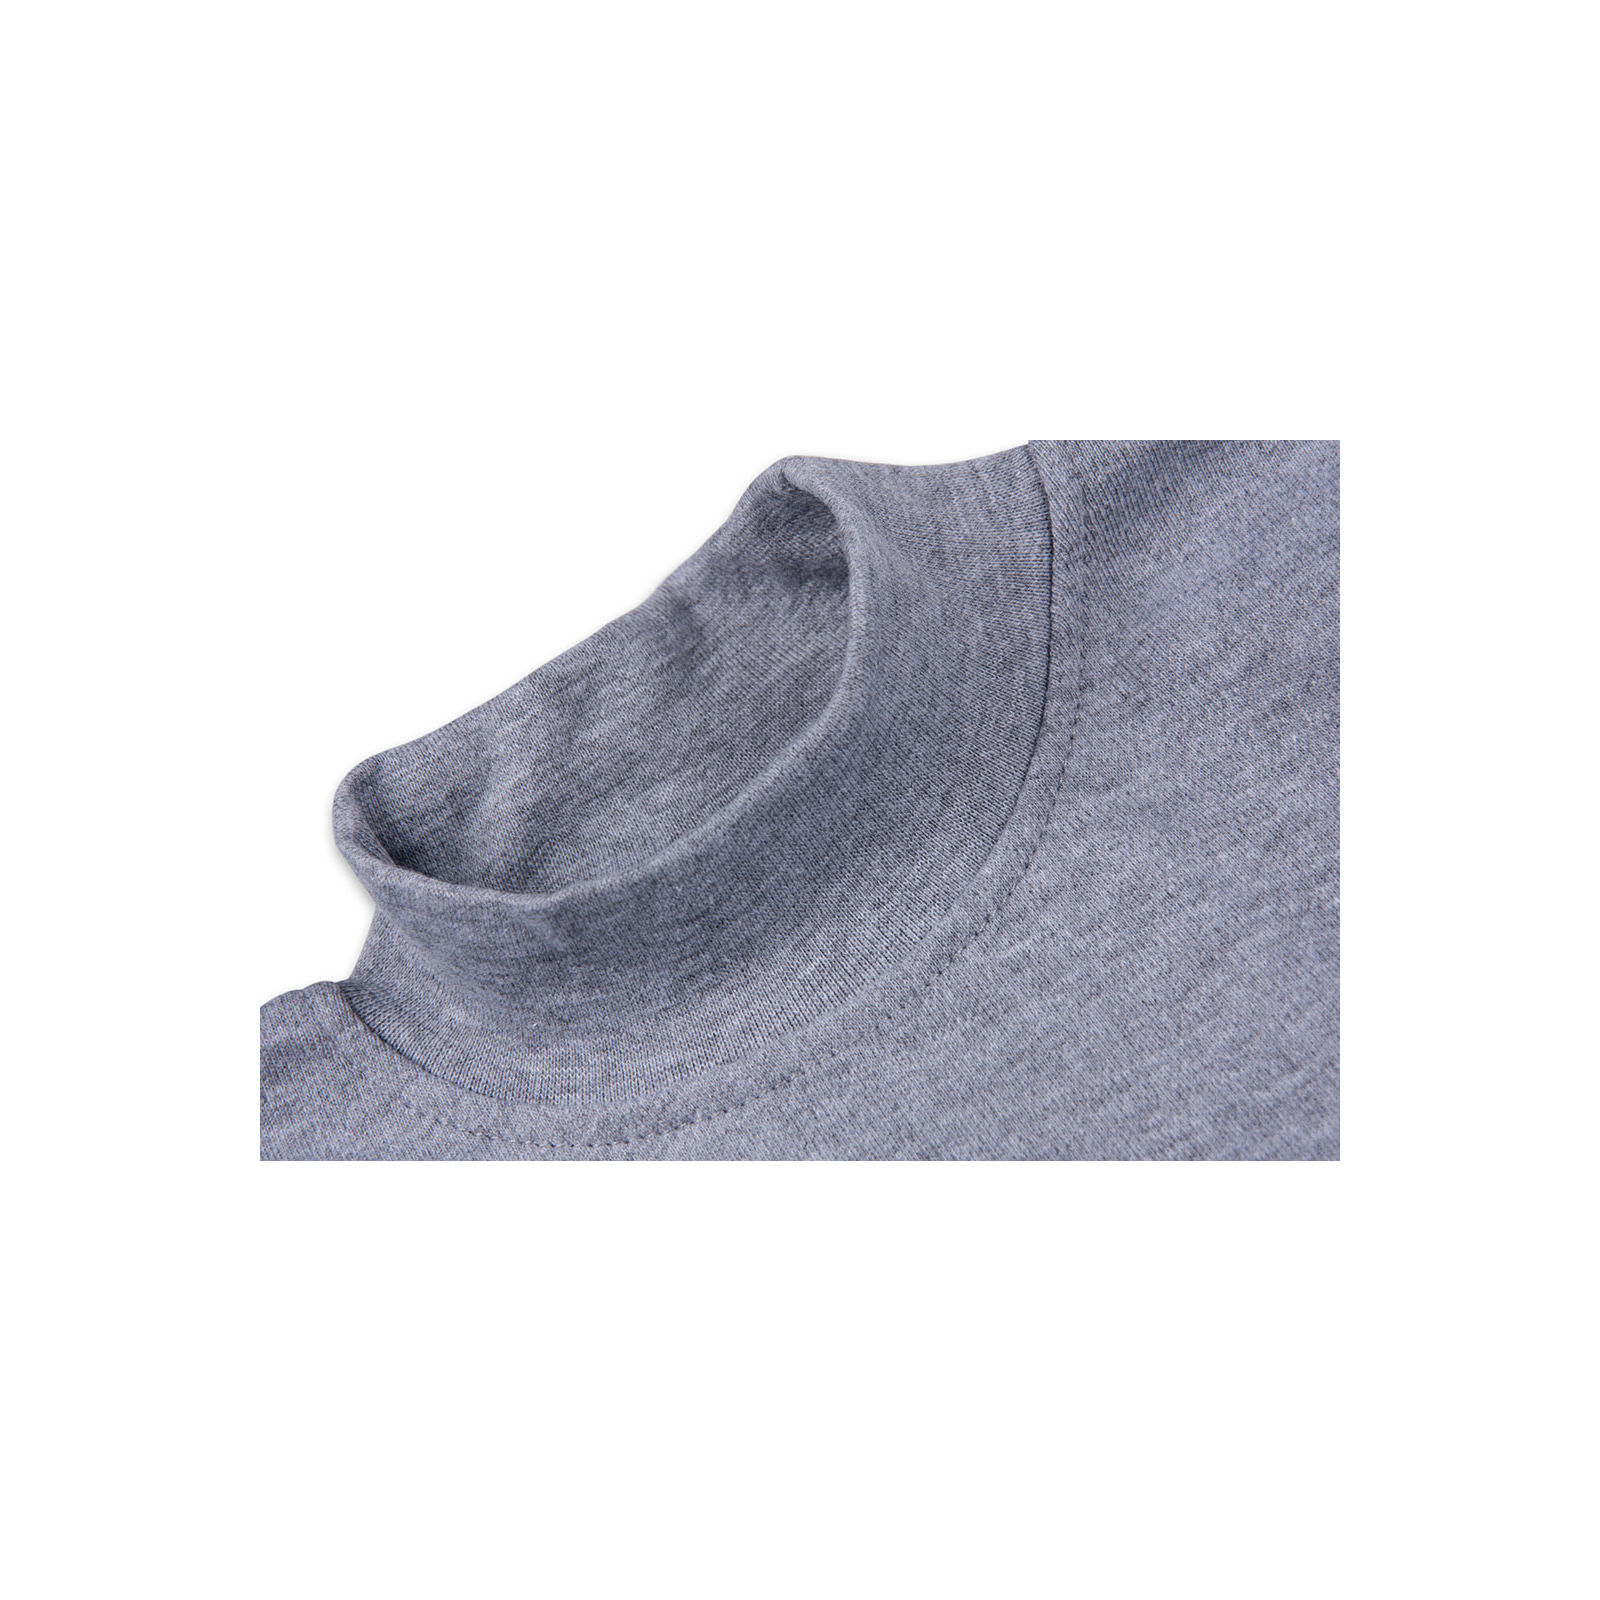 Кофта Lovetti водолазка серая меланжевая (1011-104-gray) изображение 3